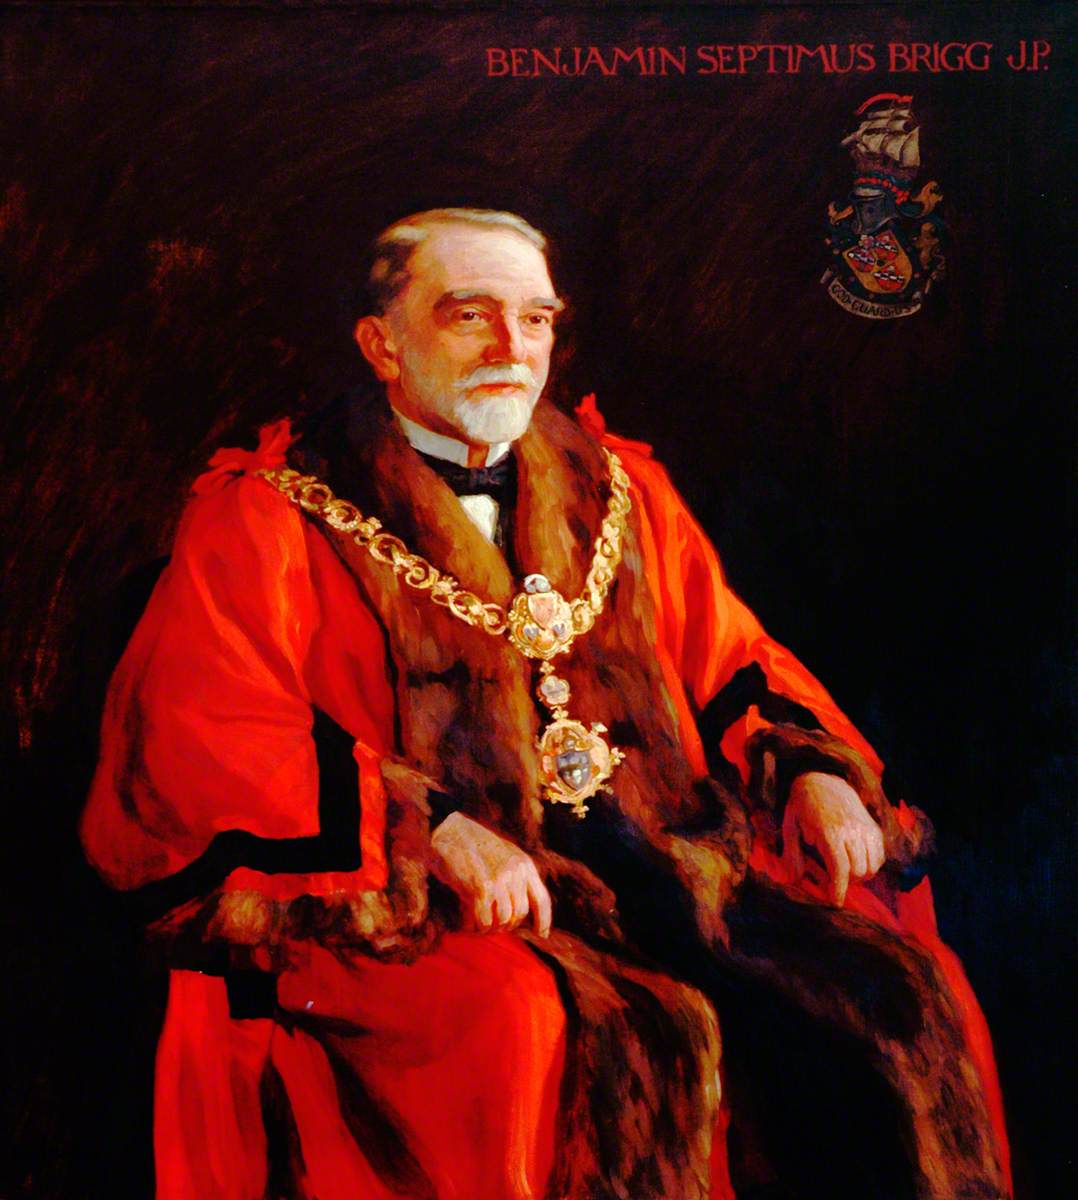 Benjamin Septimus Brigg, First Mayor of Keighley